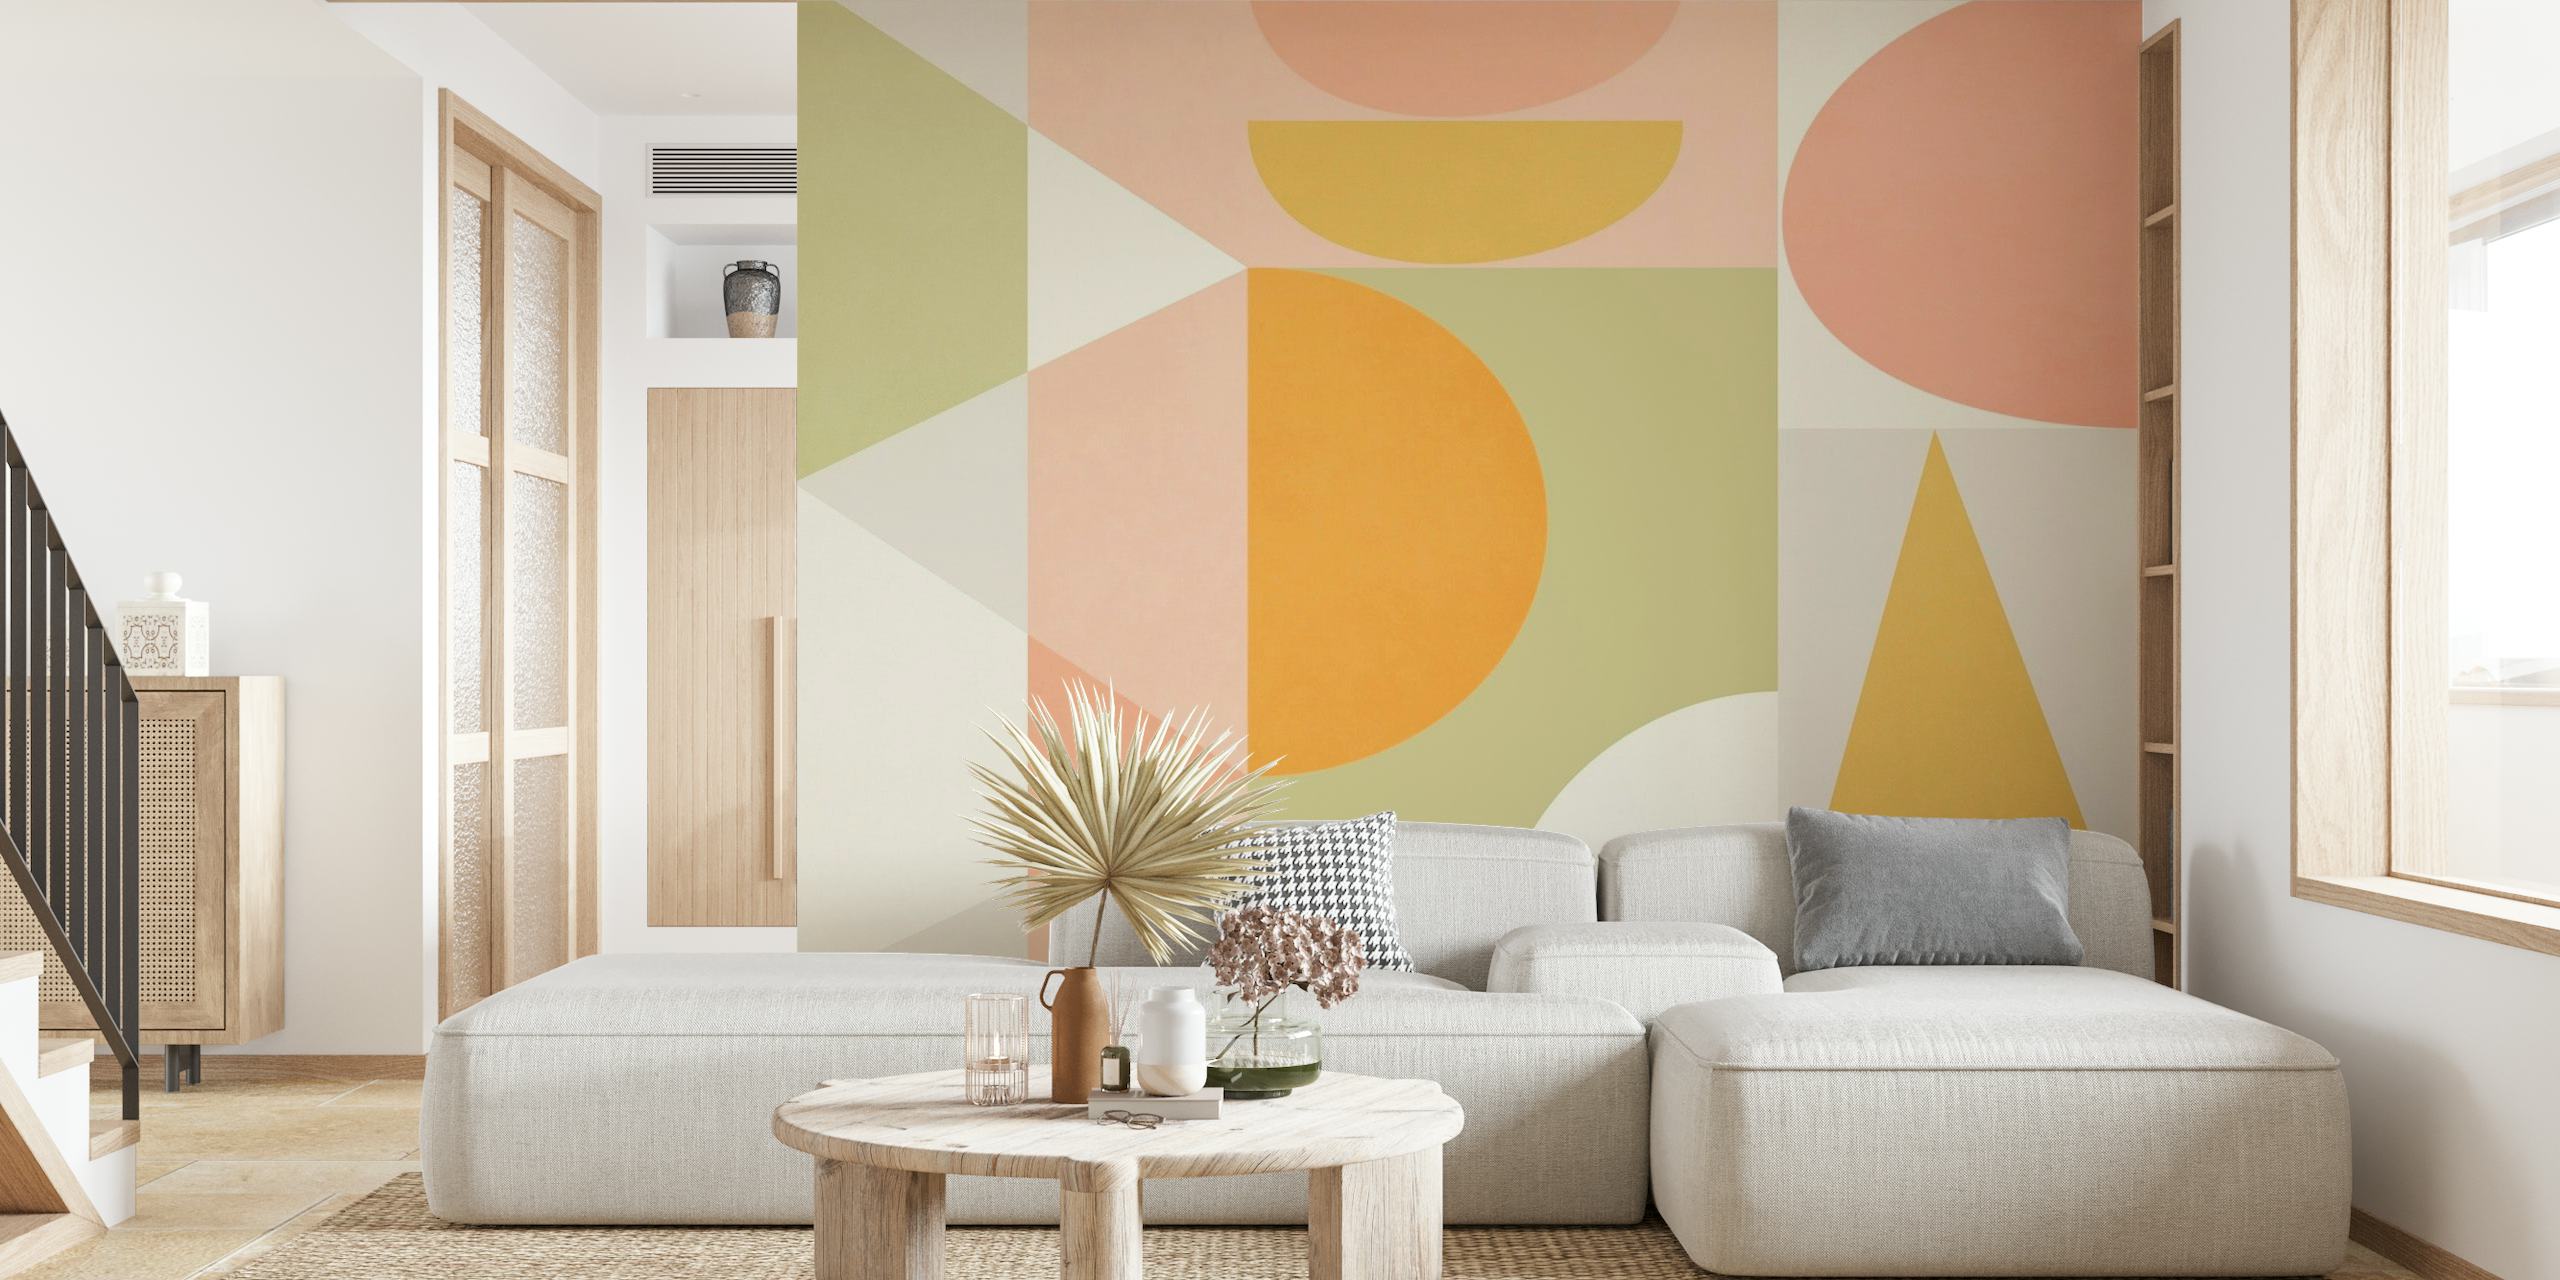 Apstraktni geometrijski G3 zidni mural pastelnih tonova i odvažnih oblika